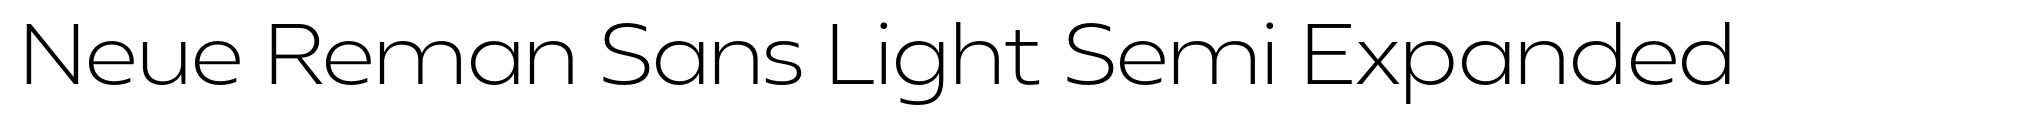 Neue Reman Sans Light Semi Expanded image